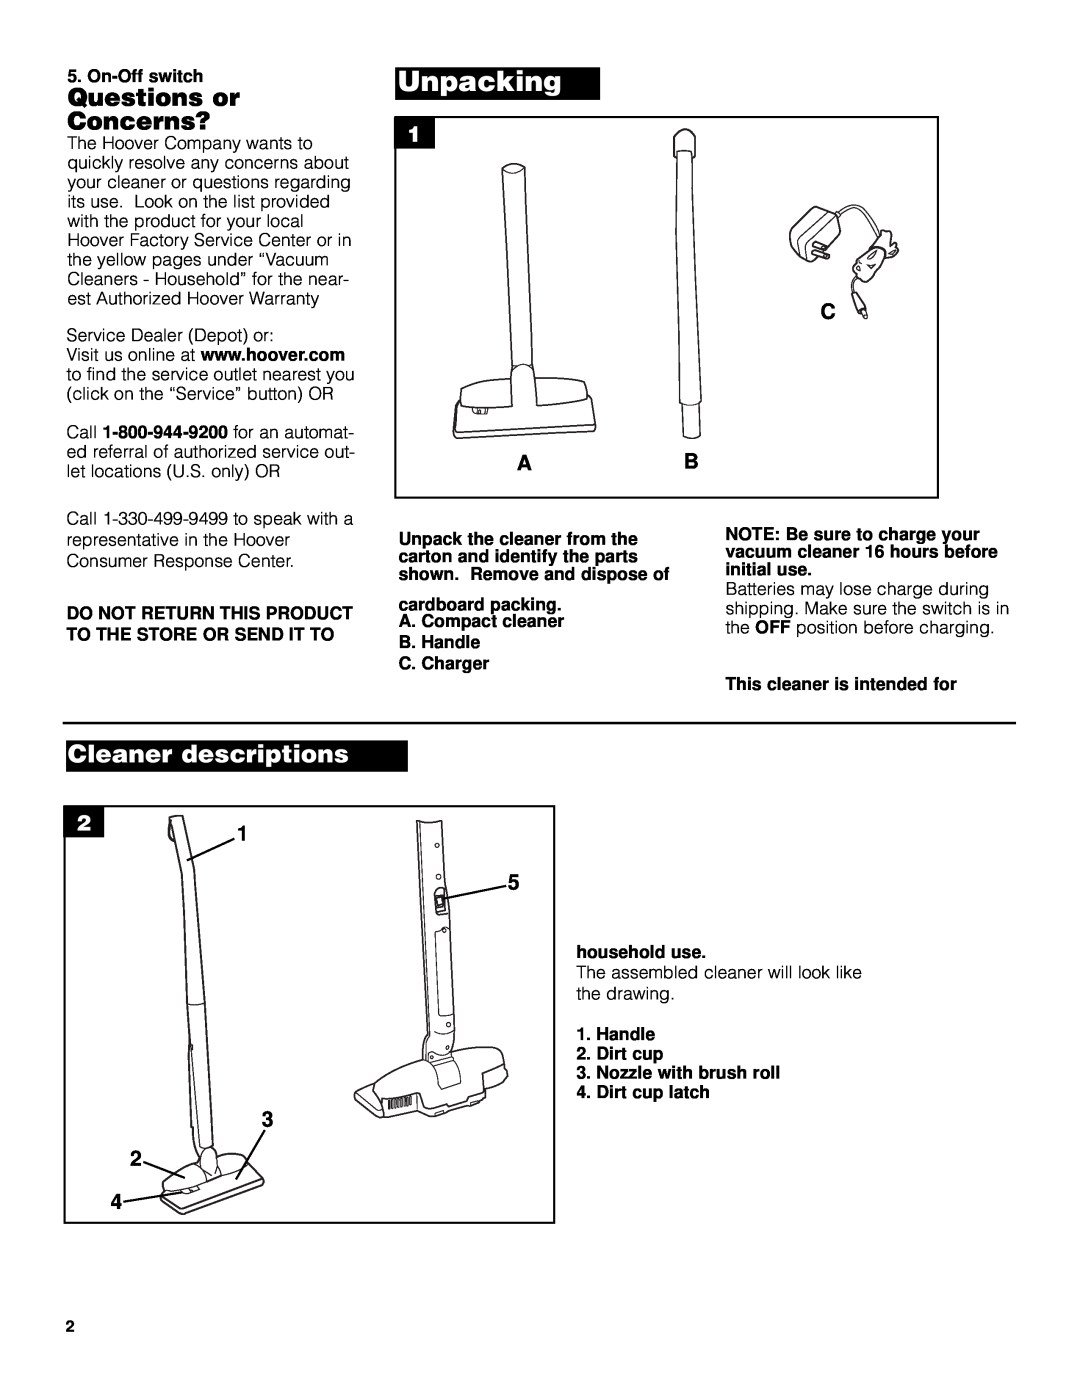 Hoover Slider Vacuum Cleaner owner manual Questions or Concerns?, Unpacking, Cleaner descriptions, C Ab 